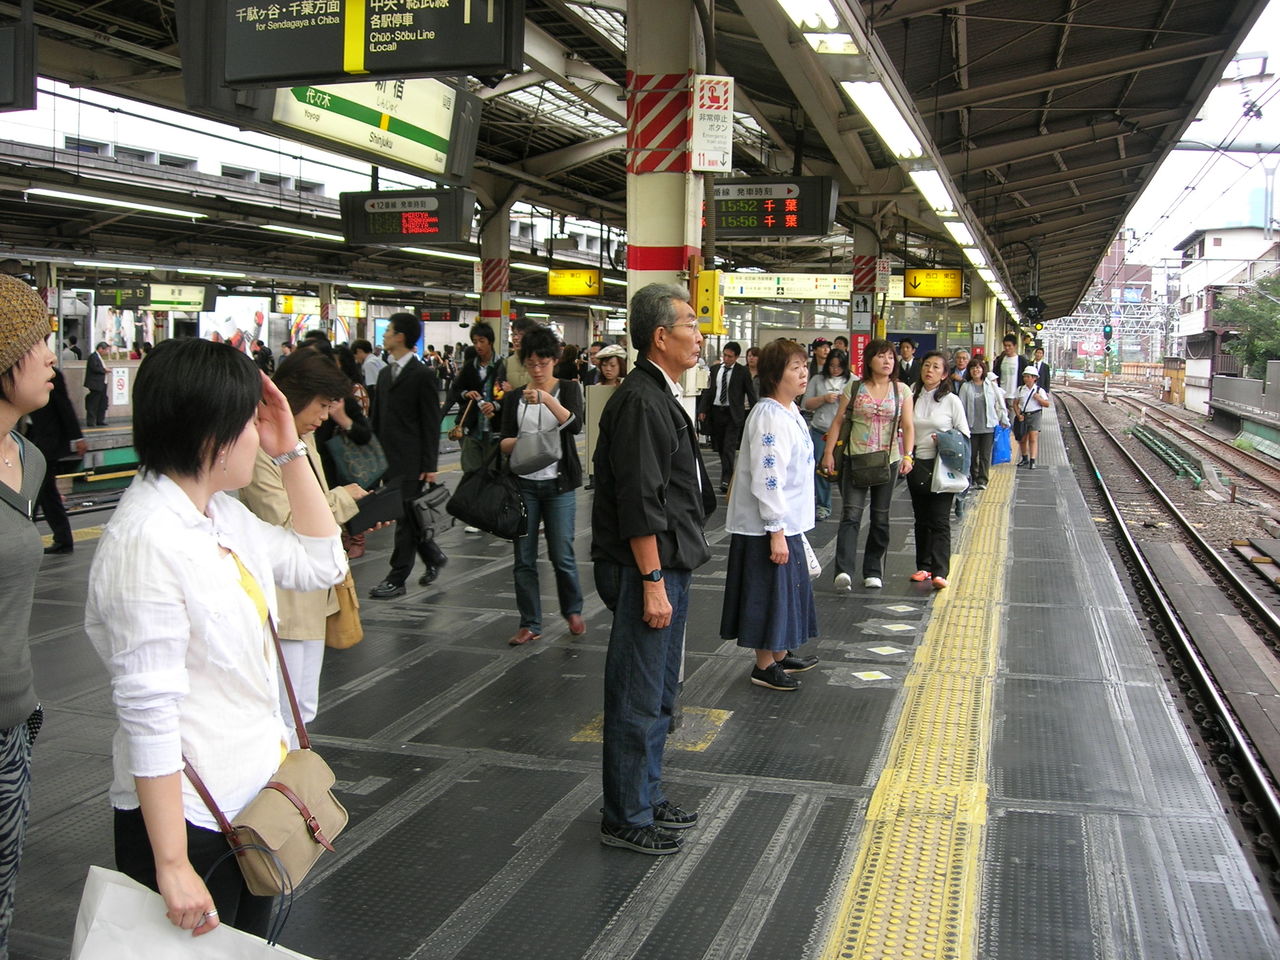 PEOPLE WAITING AT RAILROAD STATION